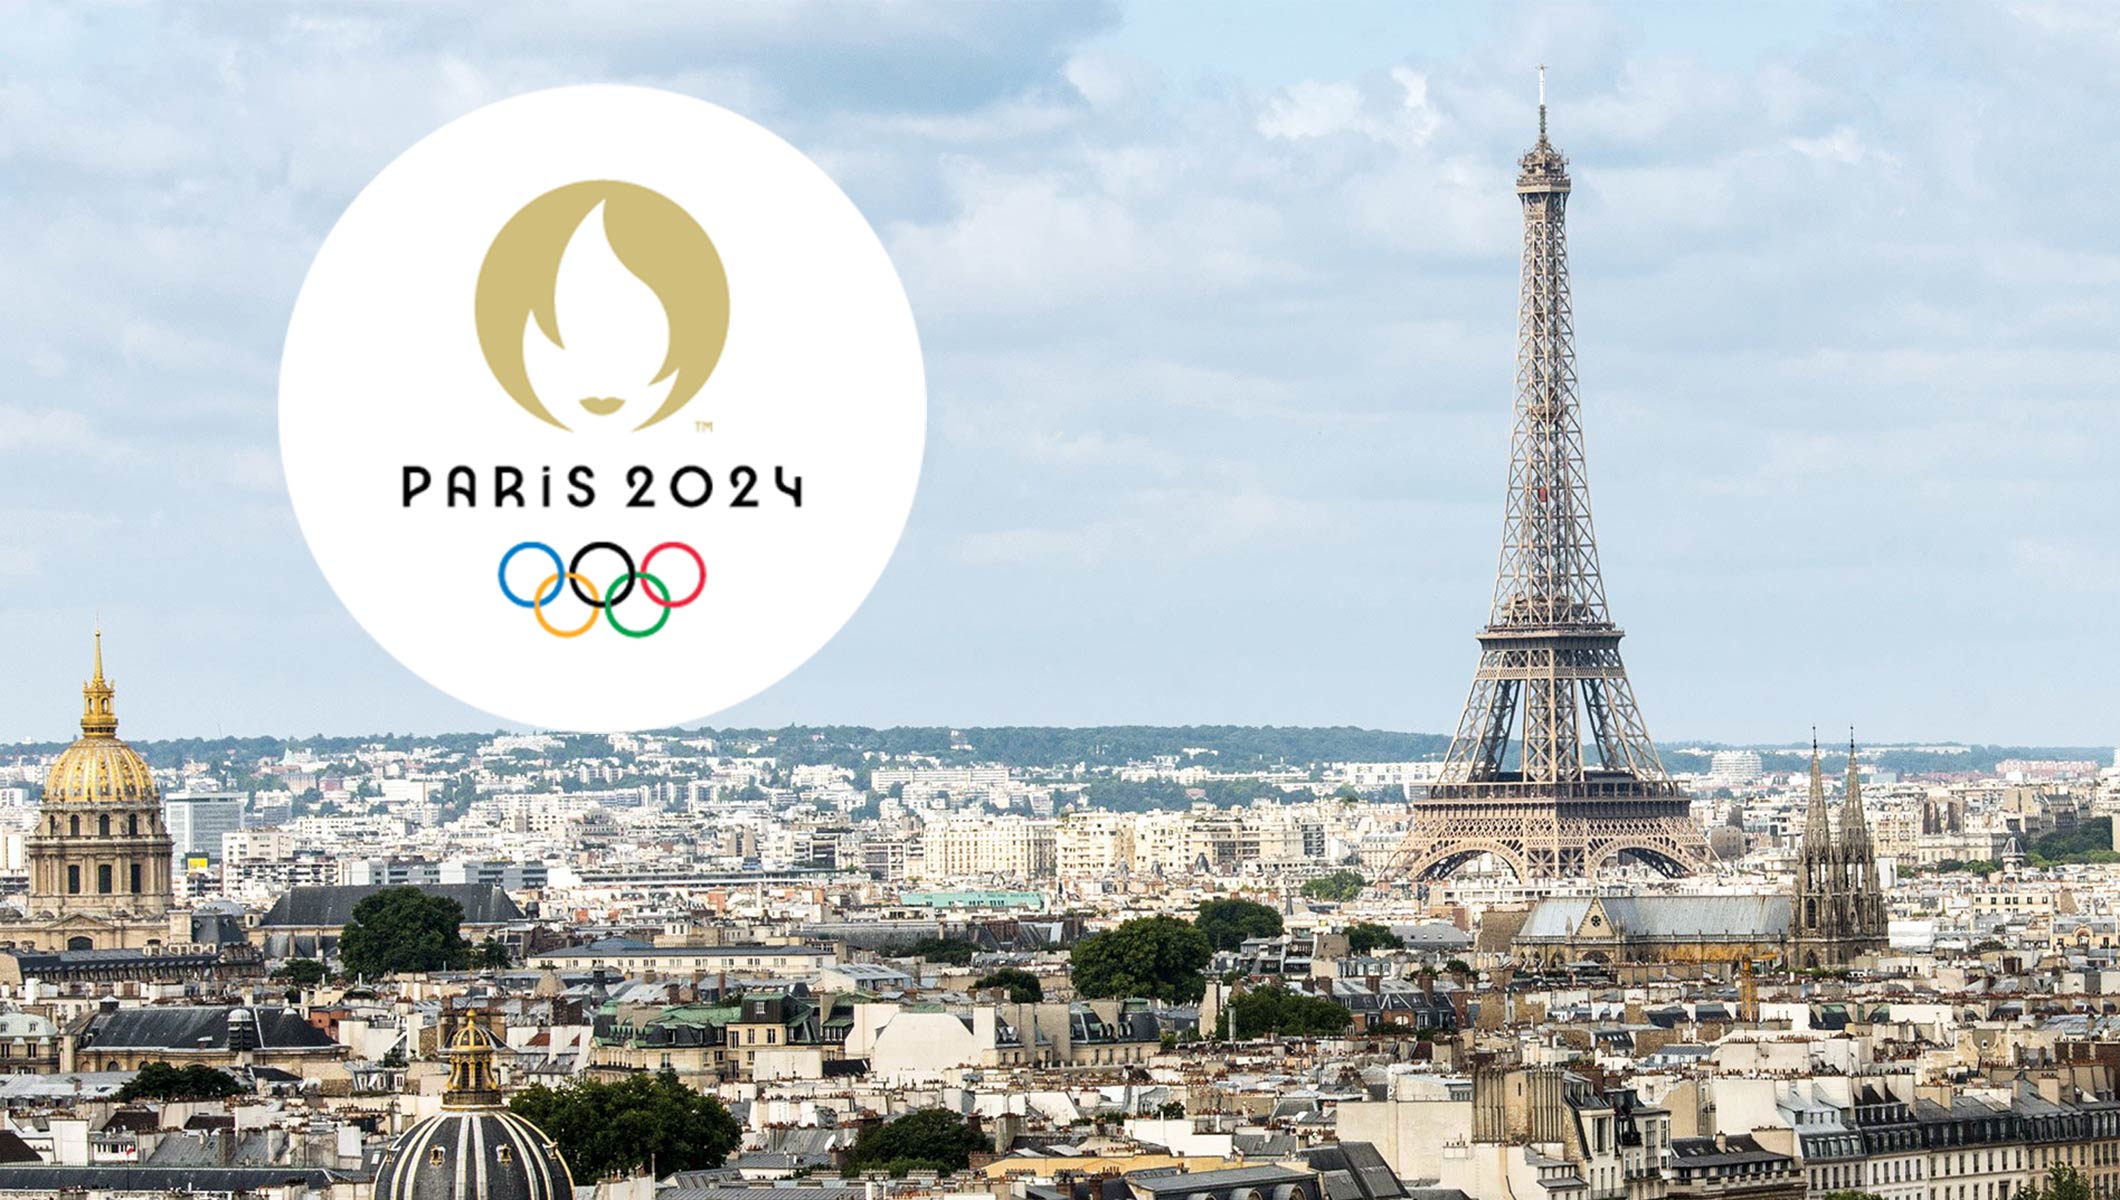 2024 Paris パリ ノート マグネットピンバッジ パラ オリンピック